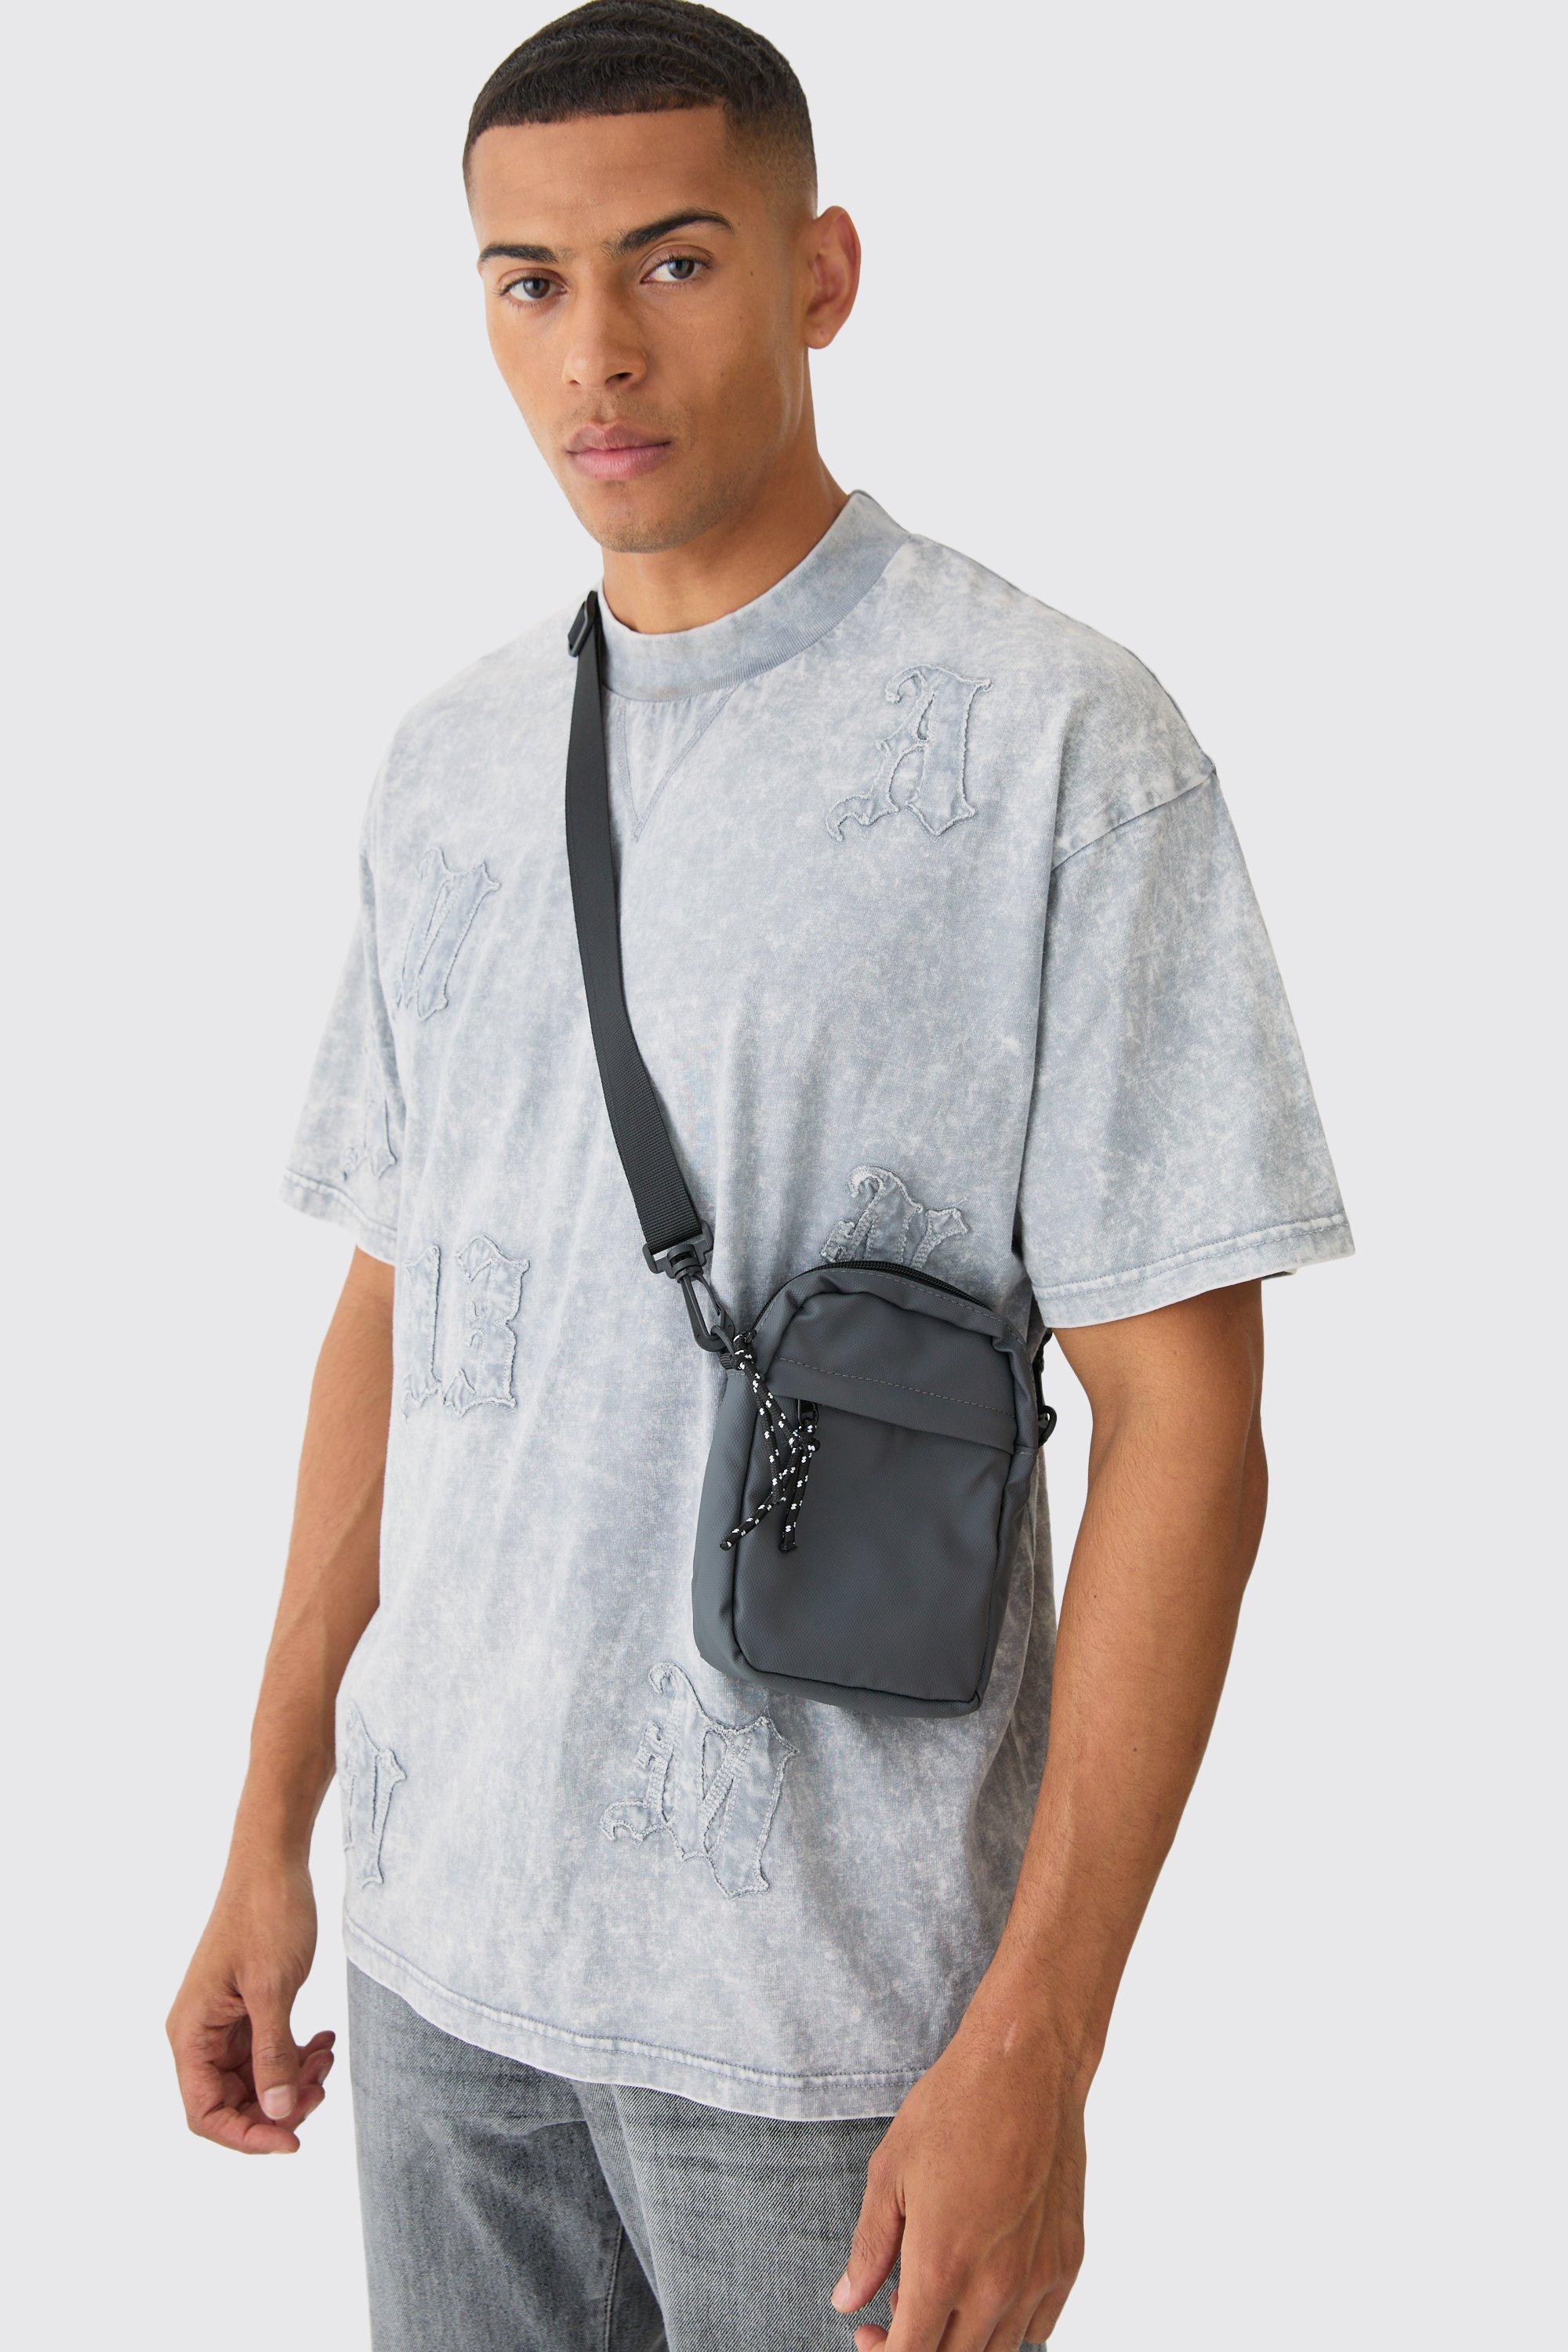 Image of Basic Messengar Bag In Charcoal, Grigio